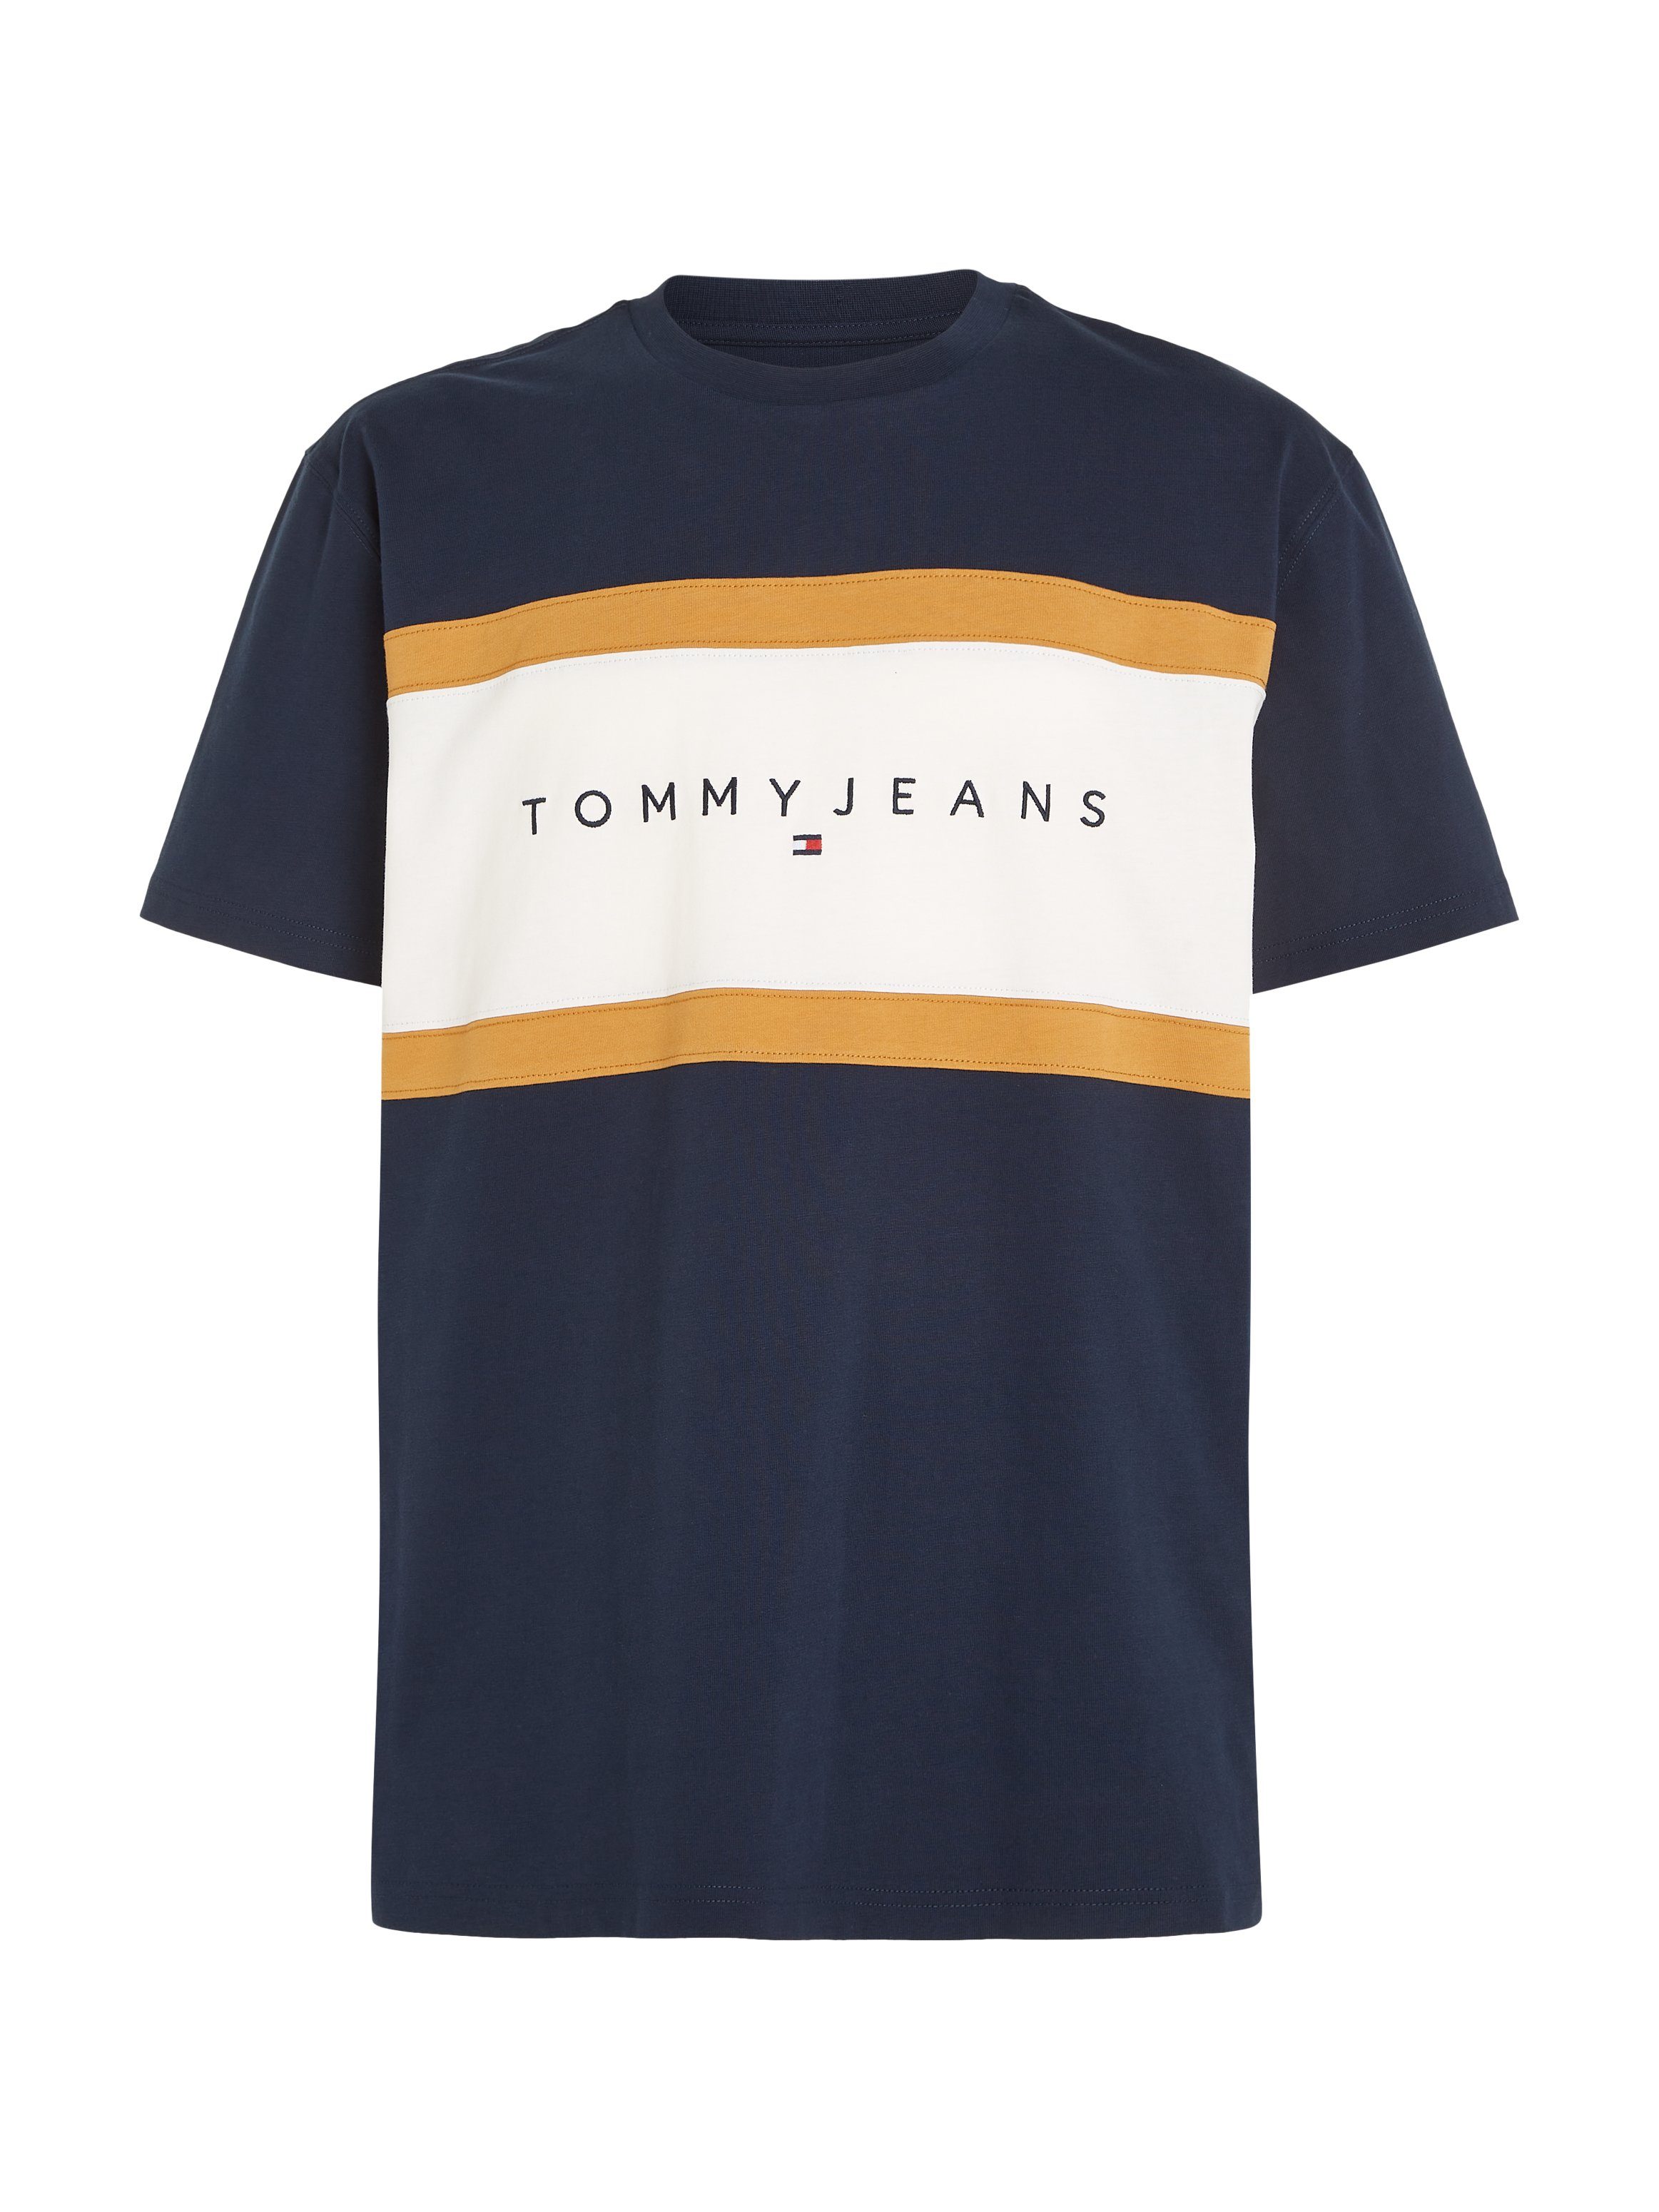 & mit REG großem TEE Jeans Tommy CUT Markenschriftzug SEW TJM T-Shirt